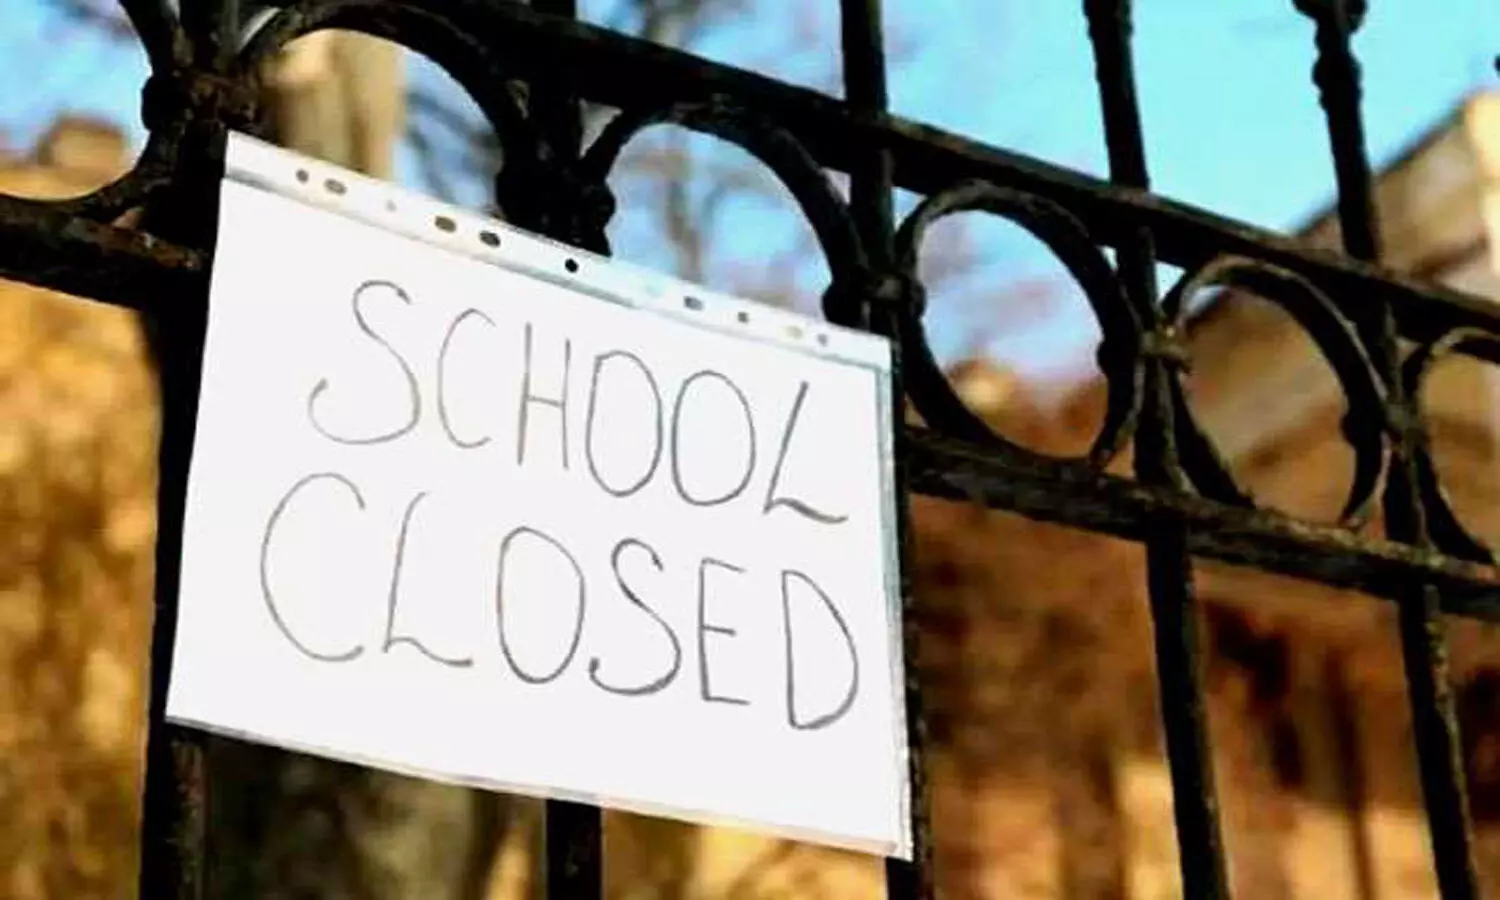 UP Schools shut till May 15, no online classes amid surge in COVID-19